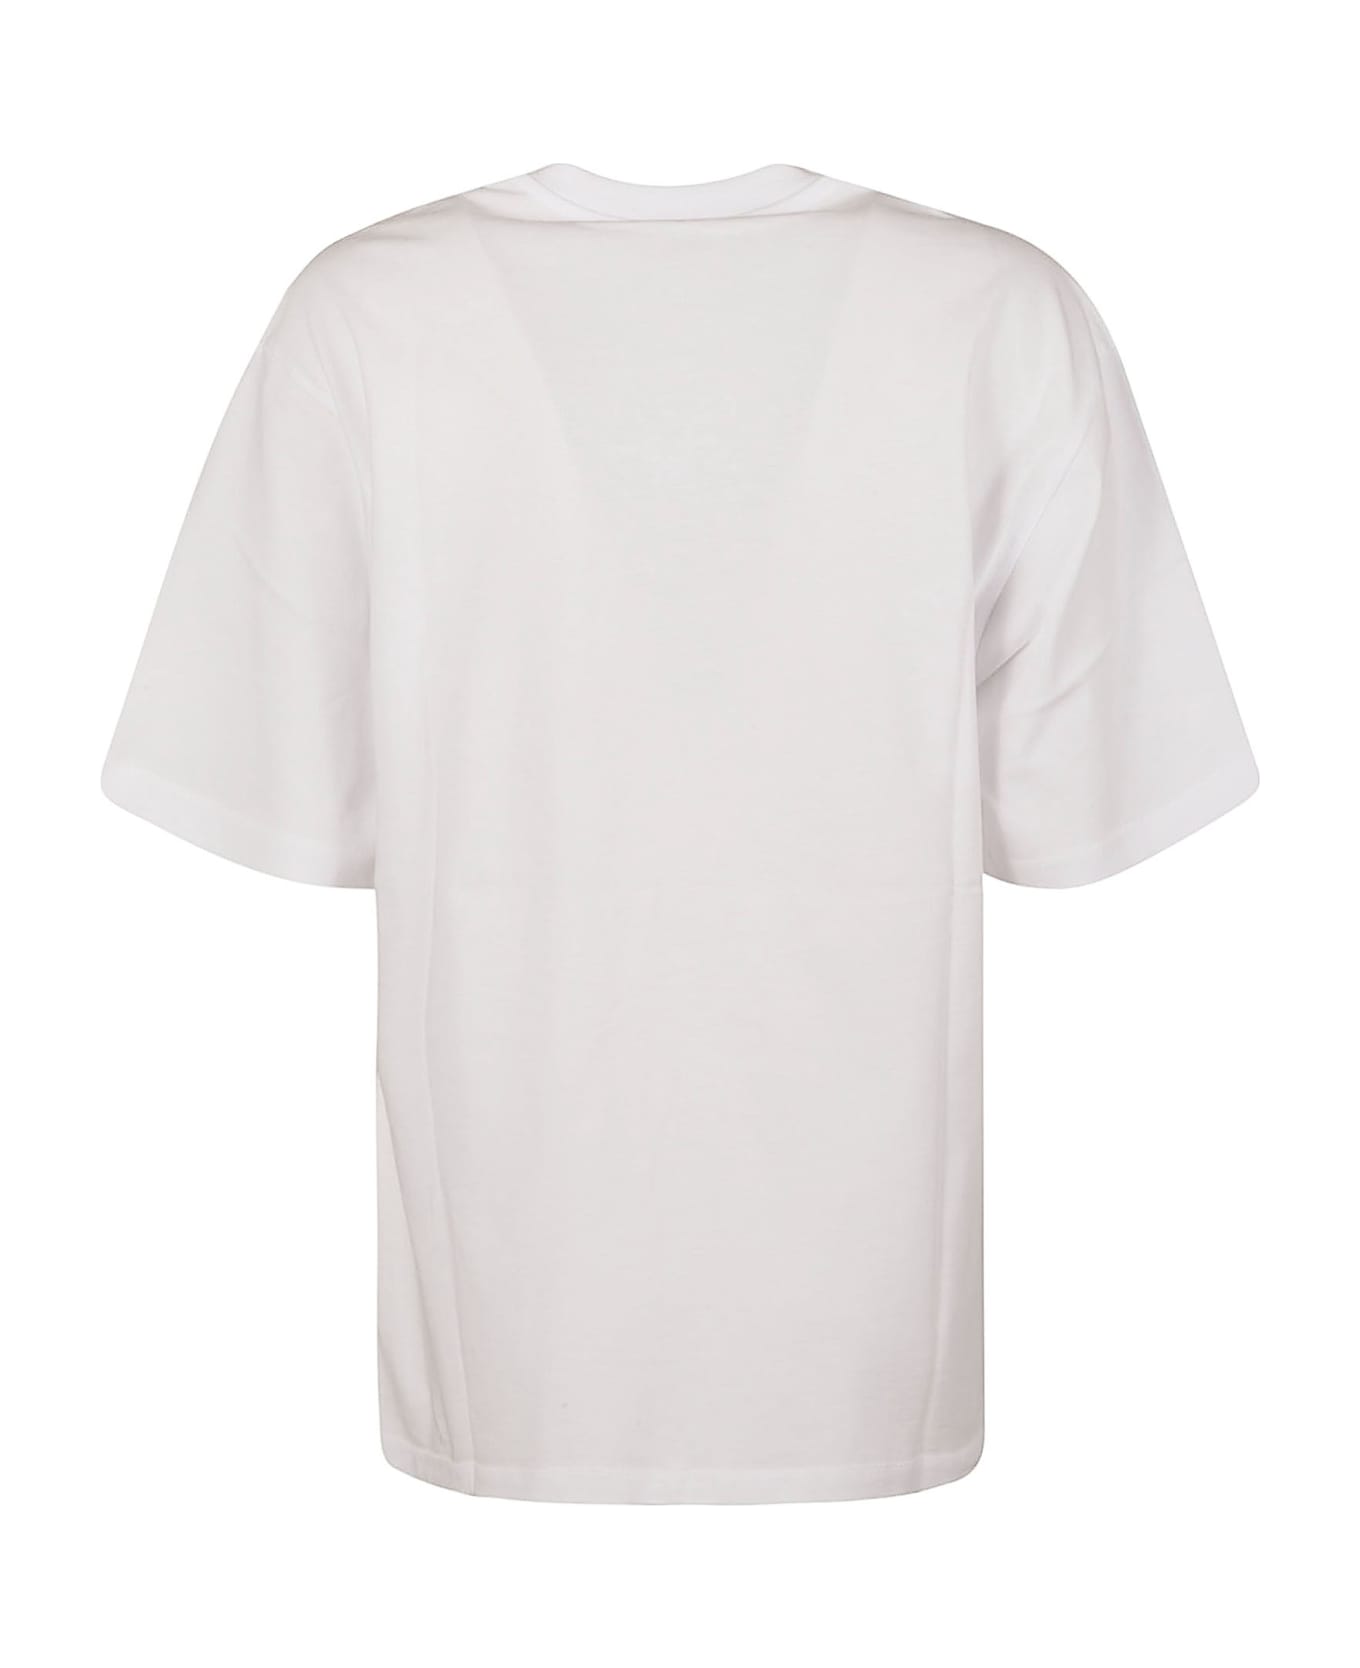 SportMax Luis T-shirt - Bianco Tシャツ